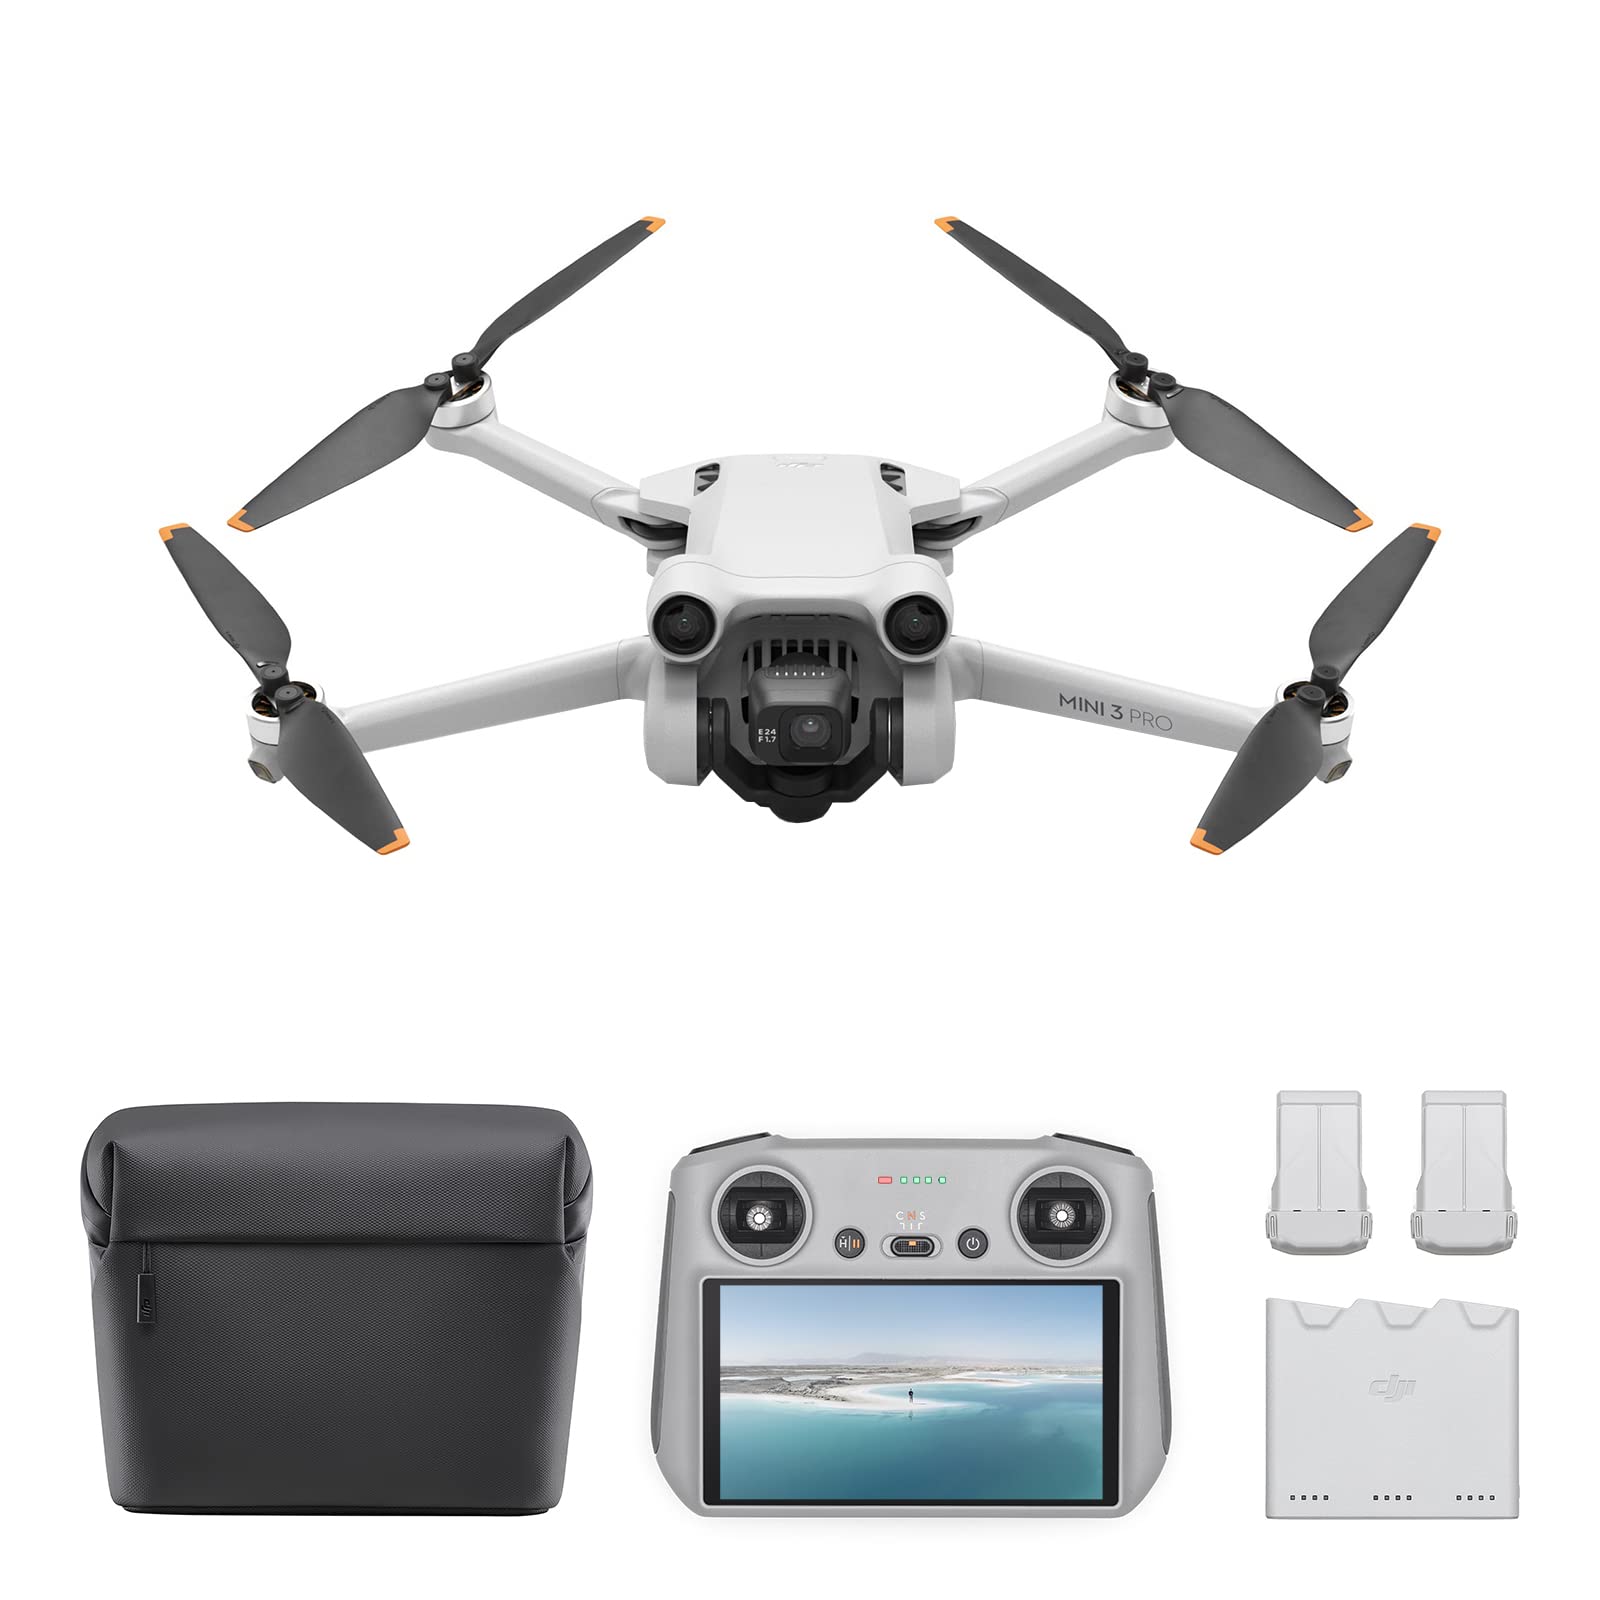 DJI Mini 3 Pro ( RC) 和 Fly More 套件加上轻型可折叠摄影无人机，具有 4K/60fps 视频、47 分钟飞行时间、三向障碍物感应、航空摄影的理想选择